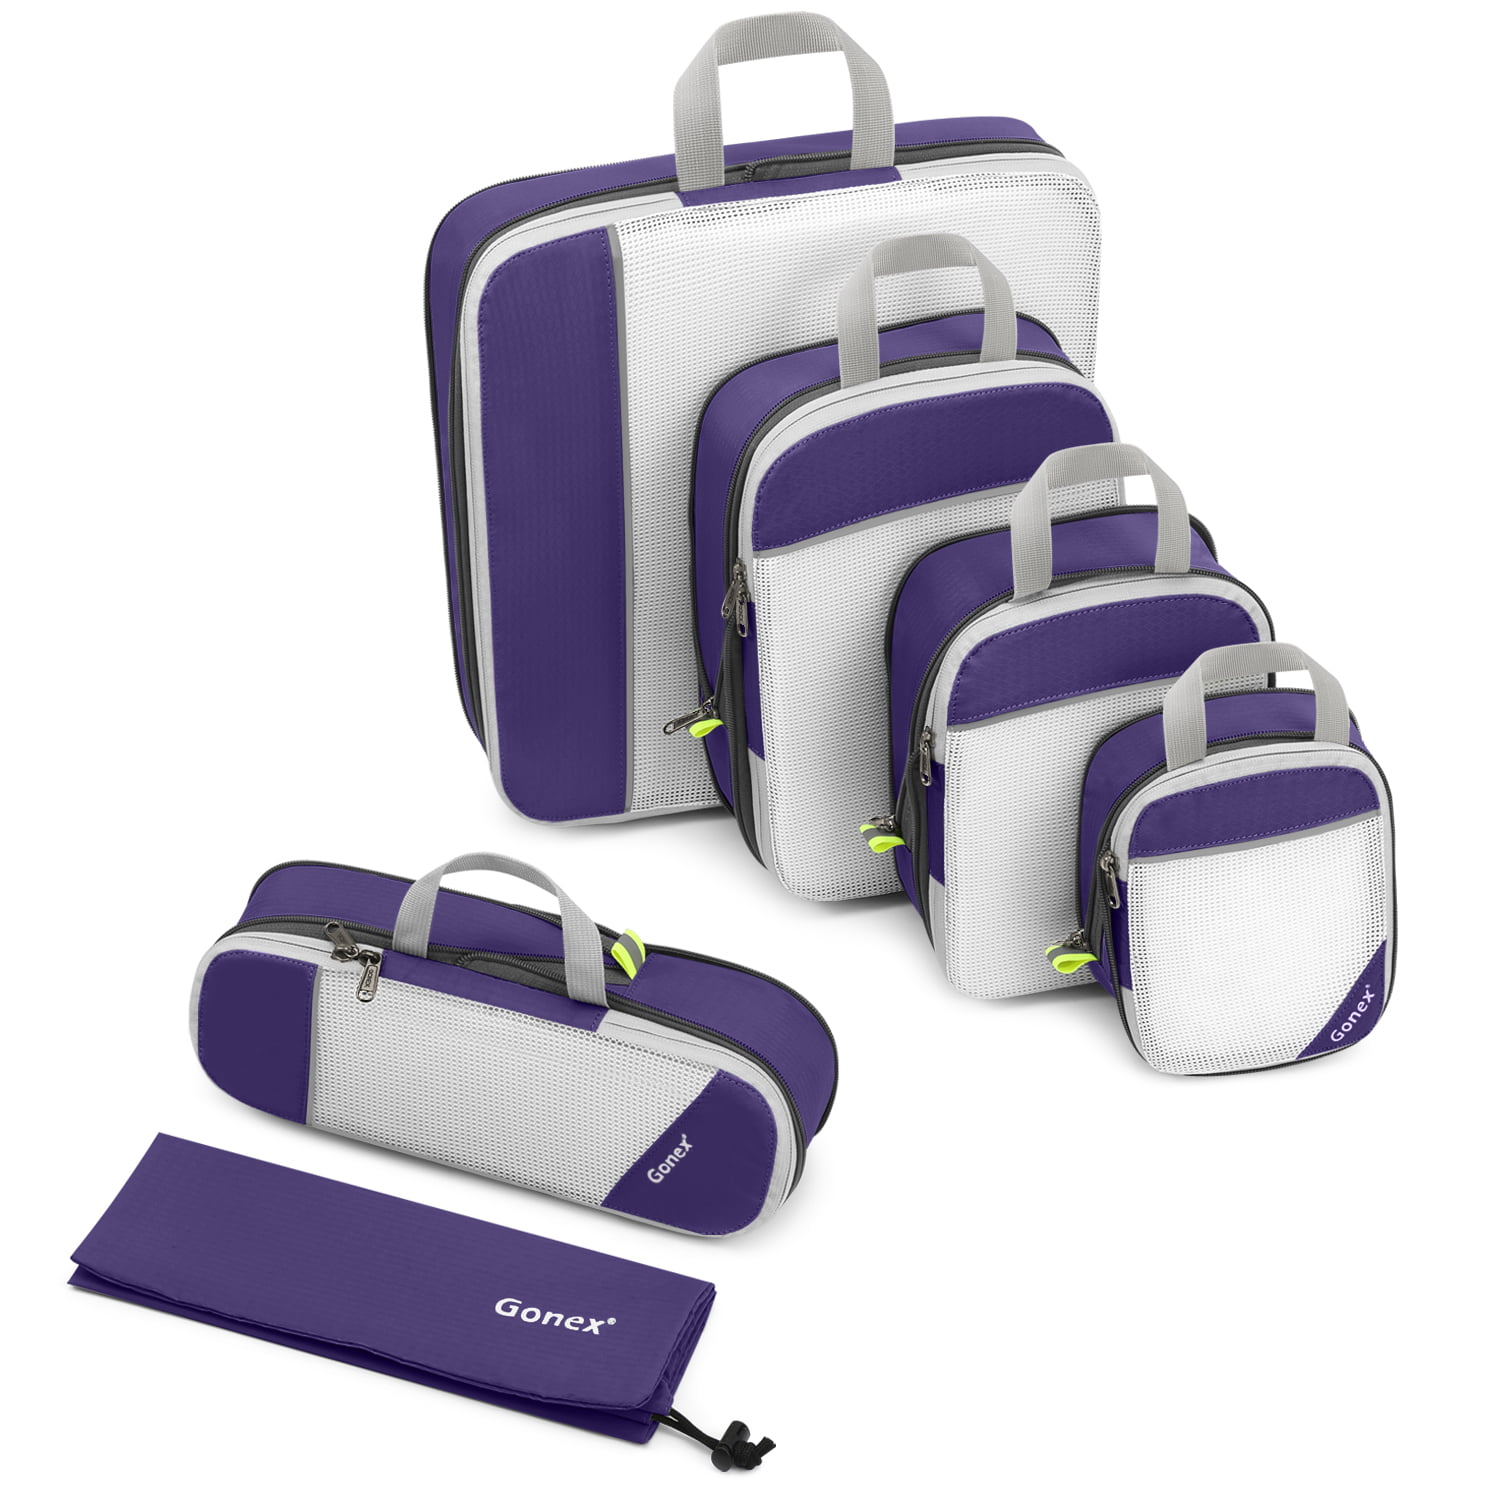 Gonex Compression Packing Cubes Set Double Sided Travel Suitcase Luggage Organizer 3pcs 4 Zip Bags Purple 